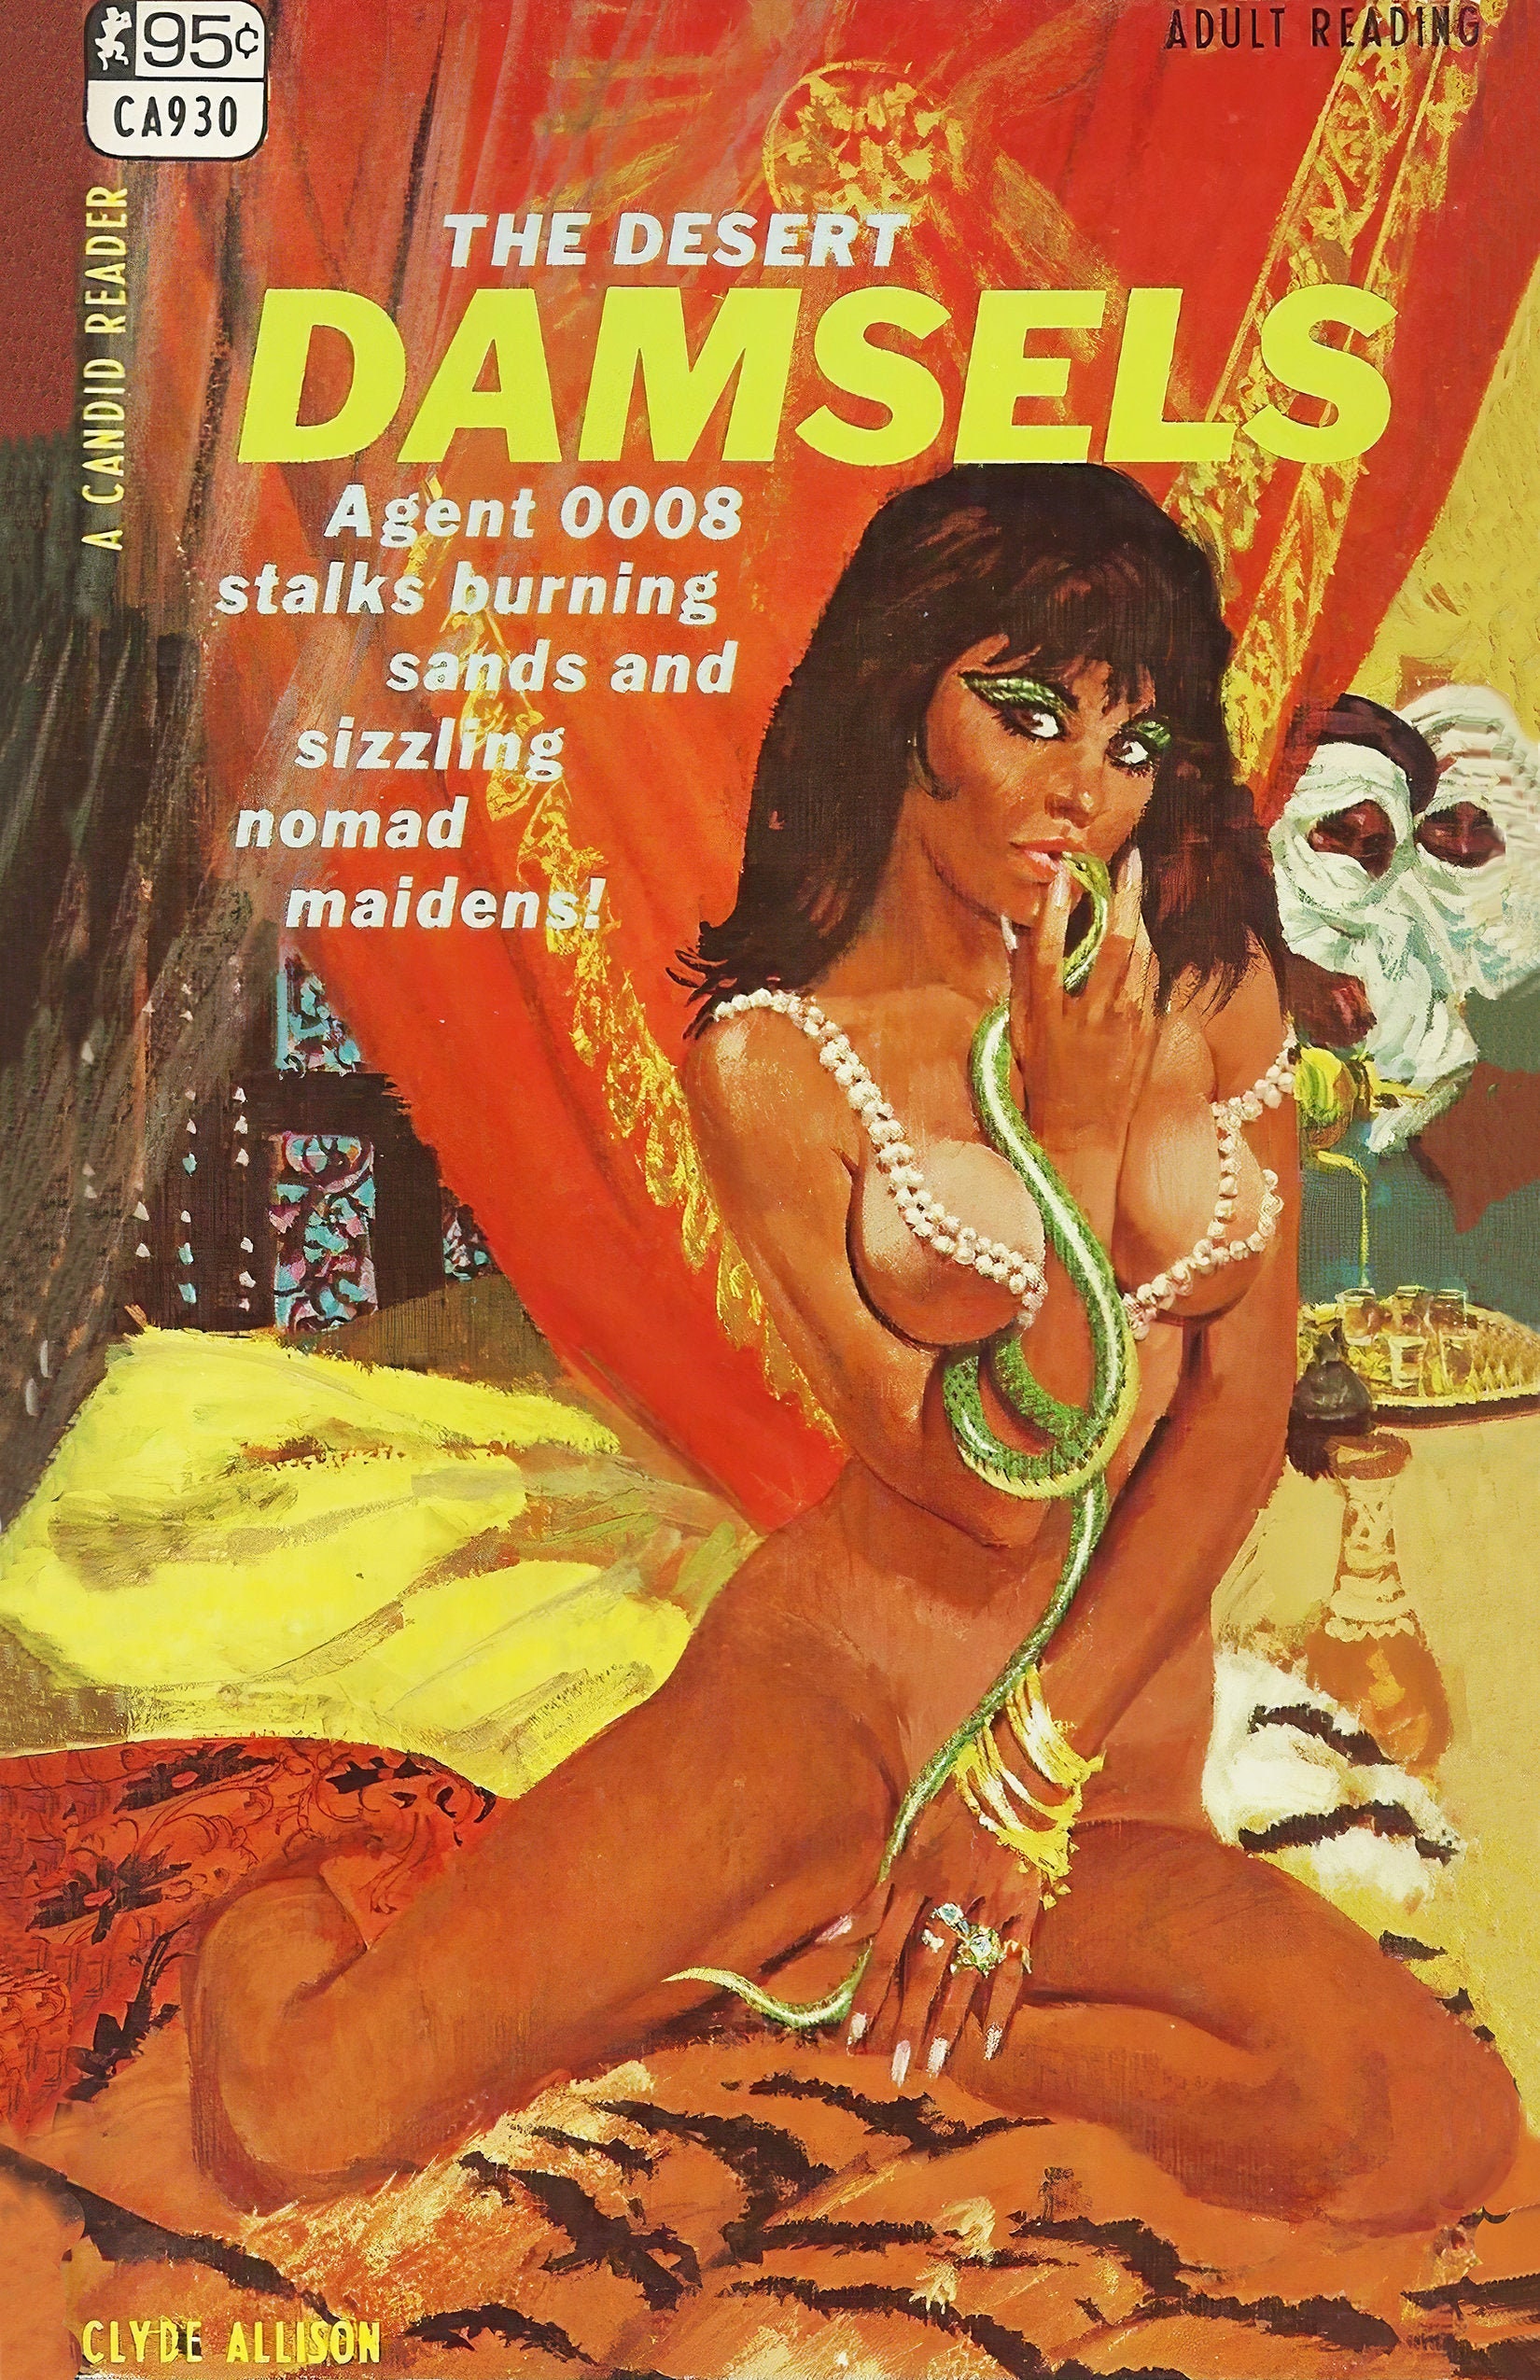 Adult Vintage Erotica - Vintage Erotic Pulp Poster the Desert Damsels - Etsy